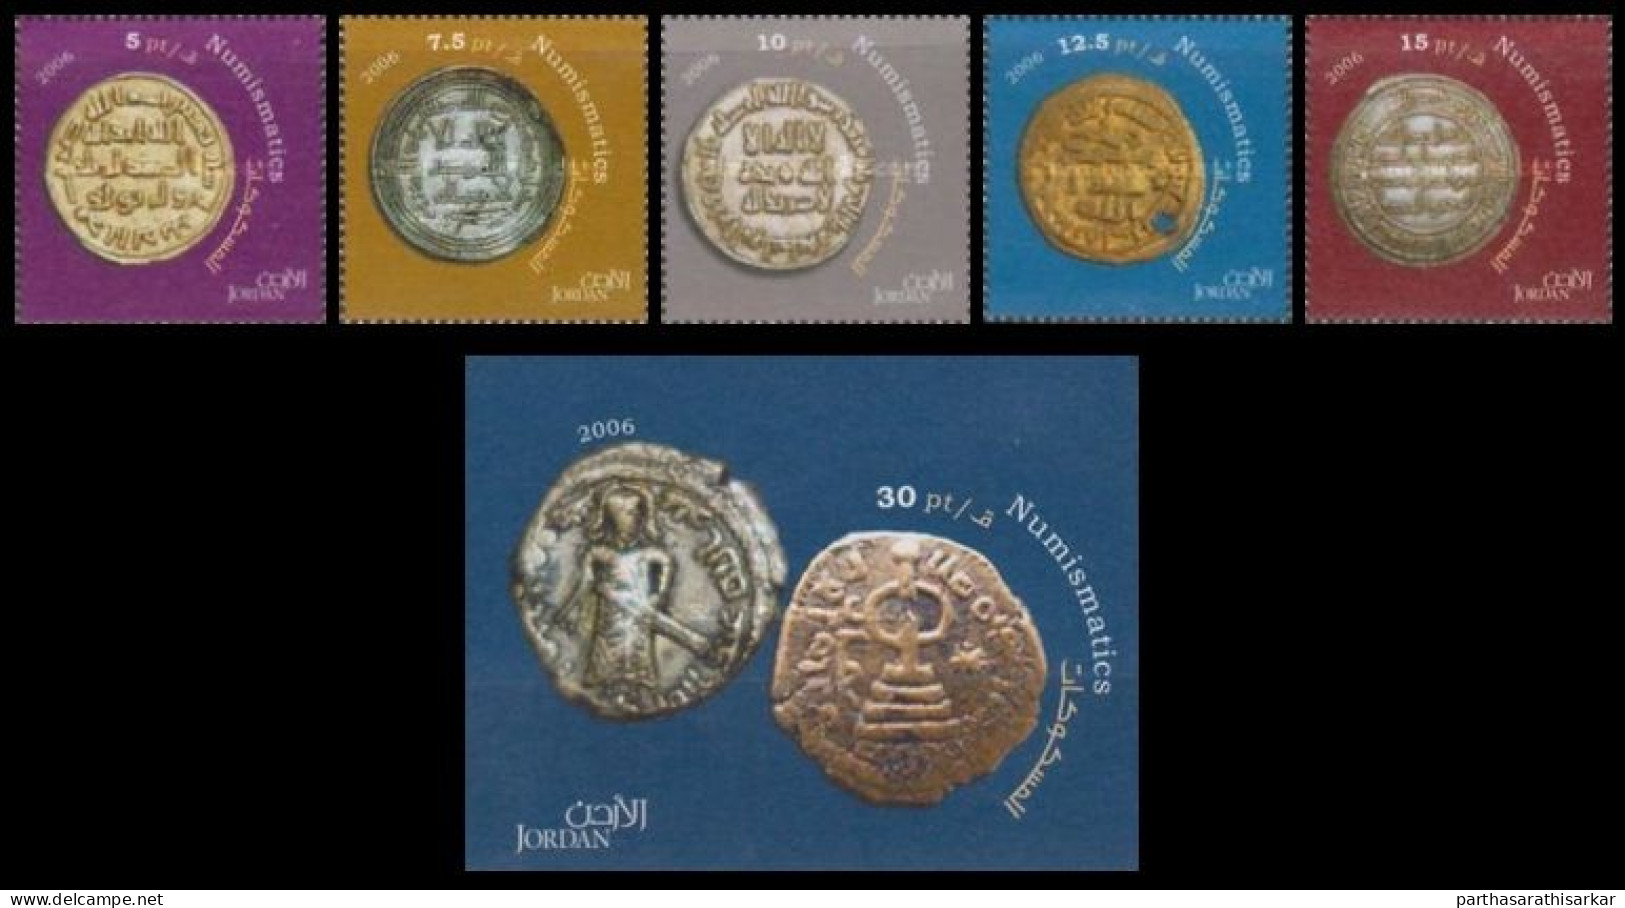 JORDAN 2006 ANCIENT COINS COMPLETE SET WITH MINIATURE SHEET MS MNH - Monedas